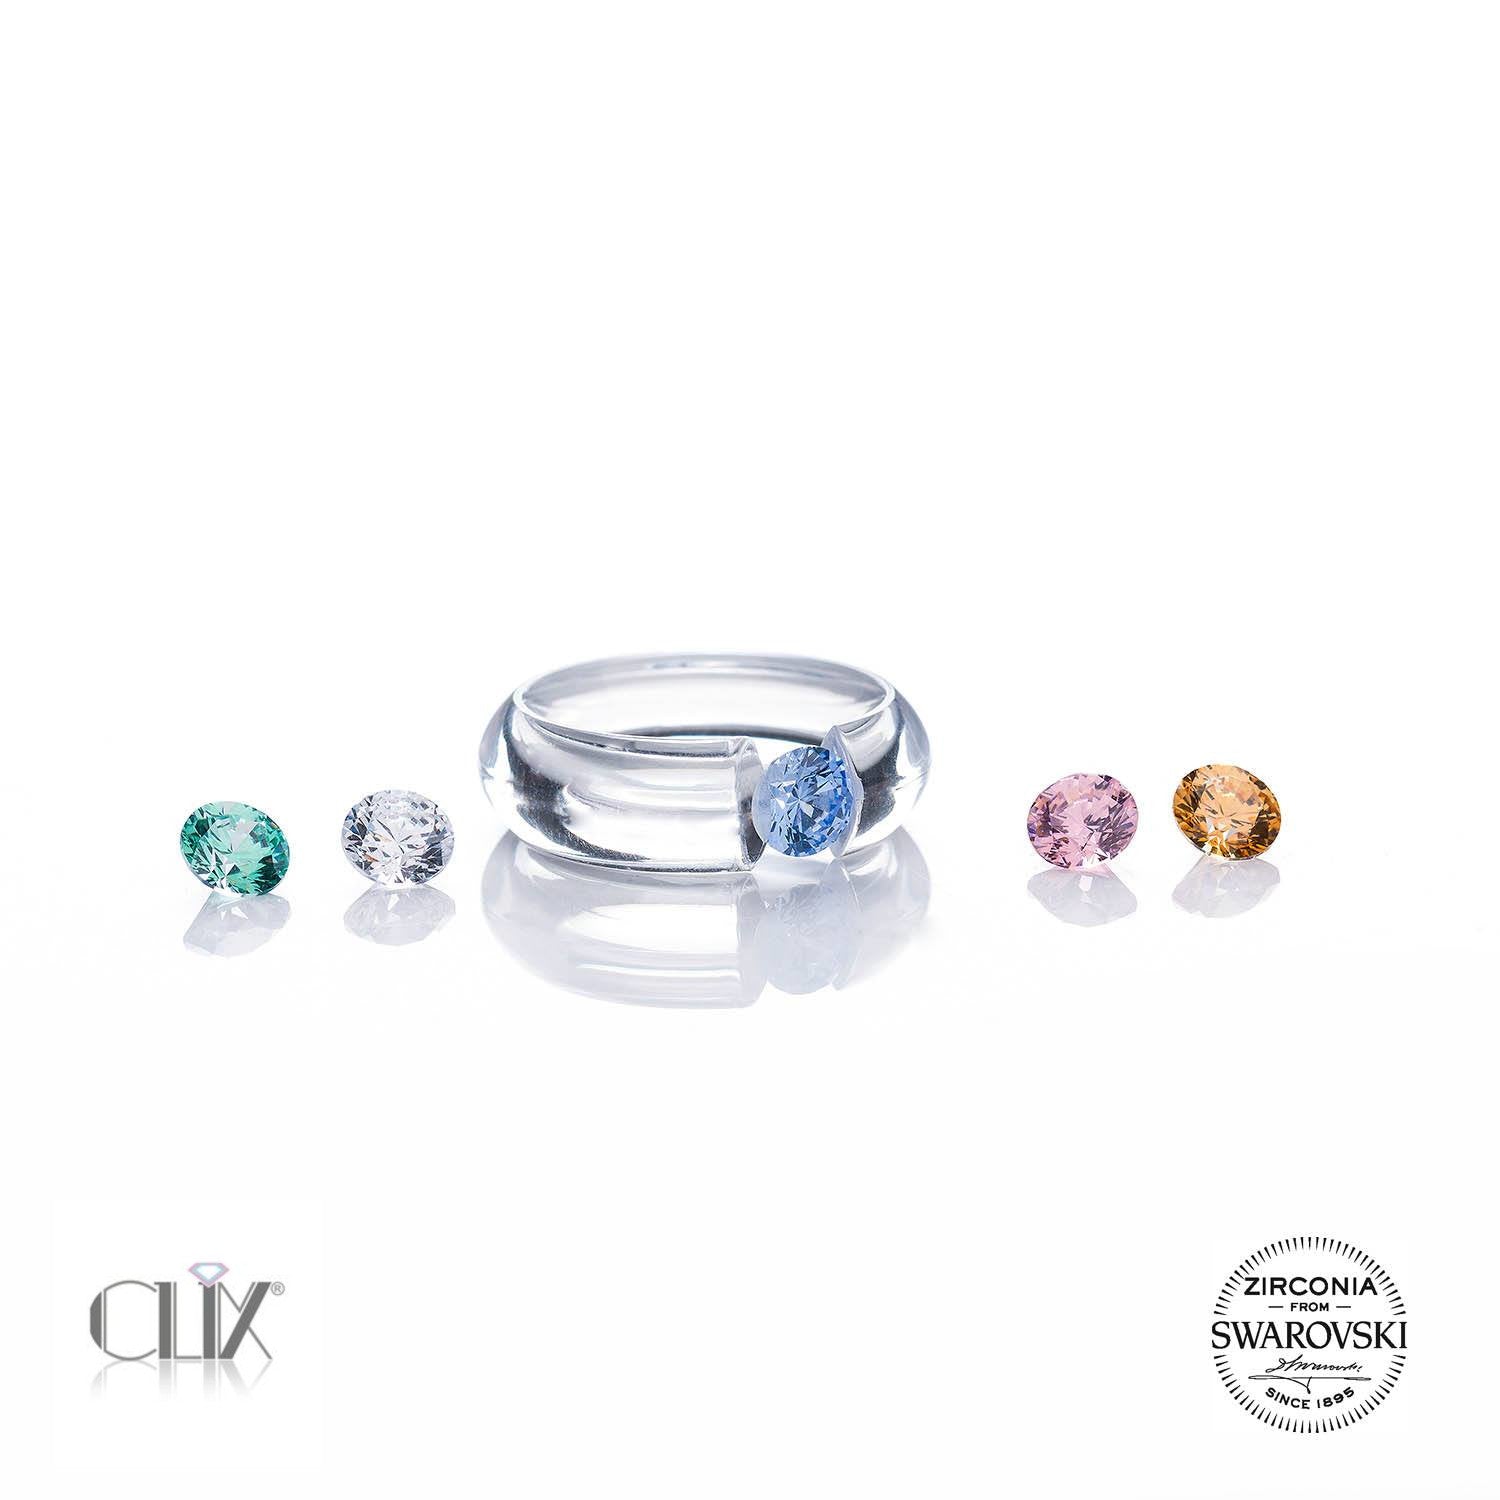 CLIX© | 1 Crystal Ring inkl. 5 Swarovski-Zirkonia